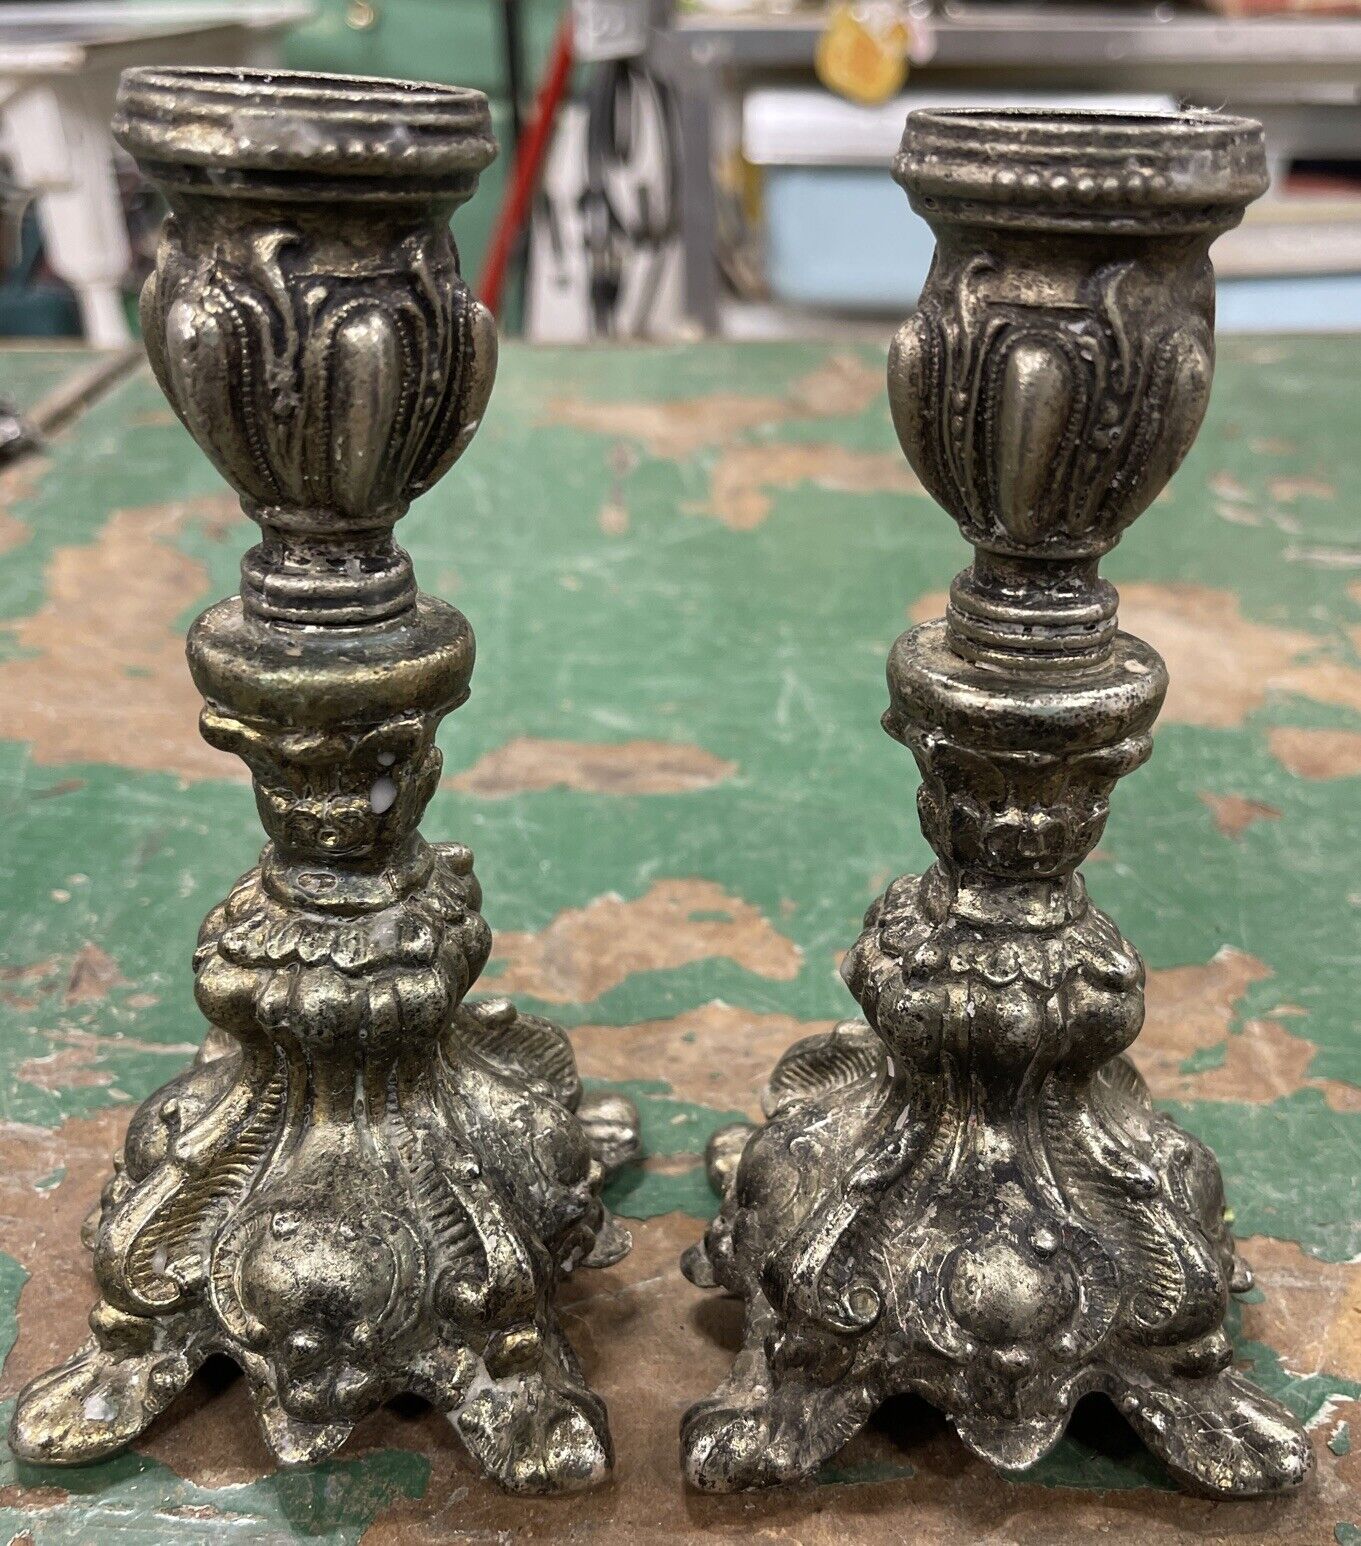 2 Matching Vintage Short Italian Design Brass Looking Candlestick Holders 6”